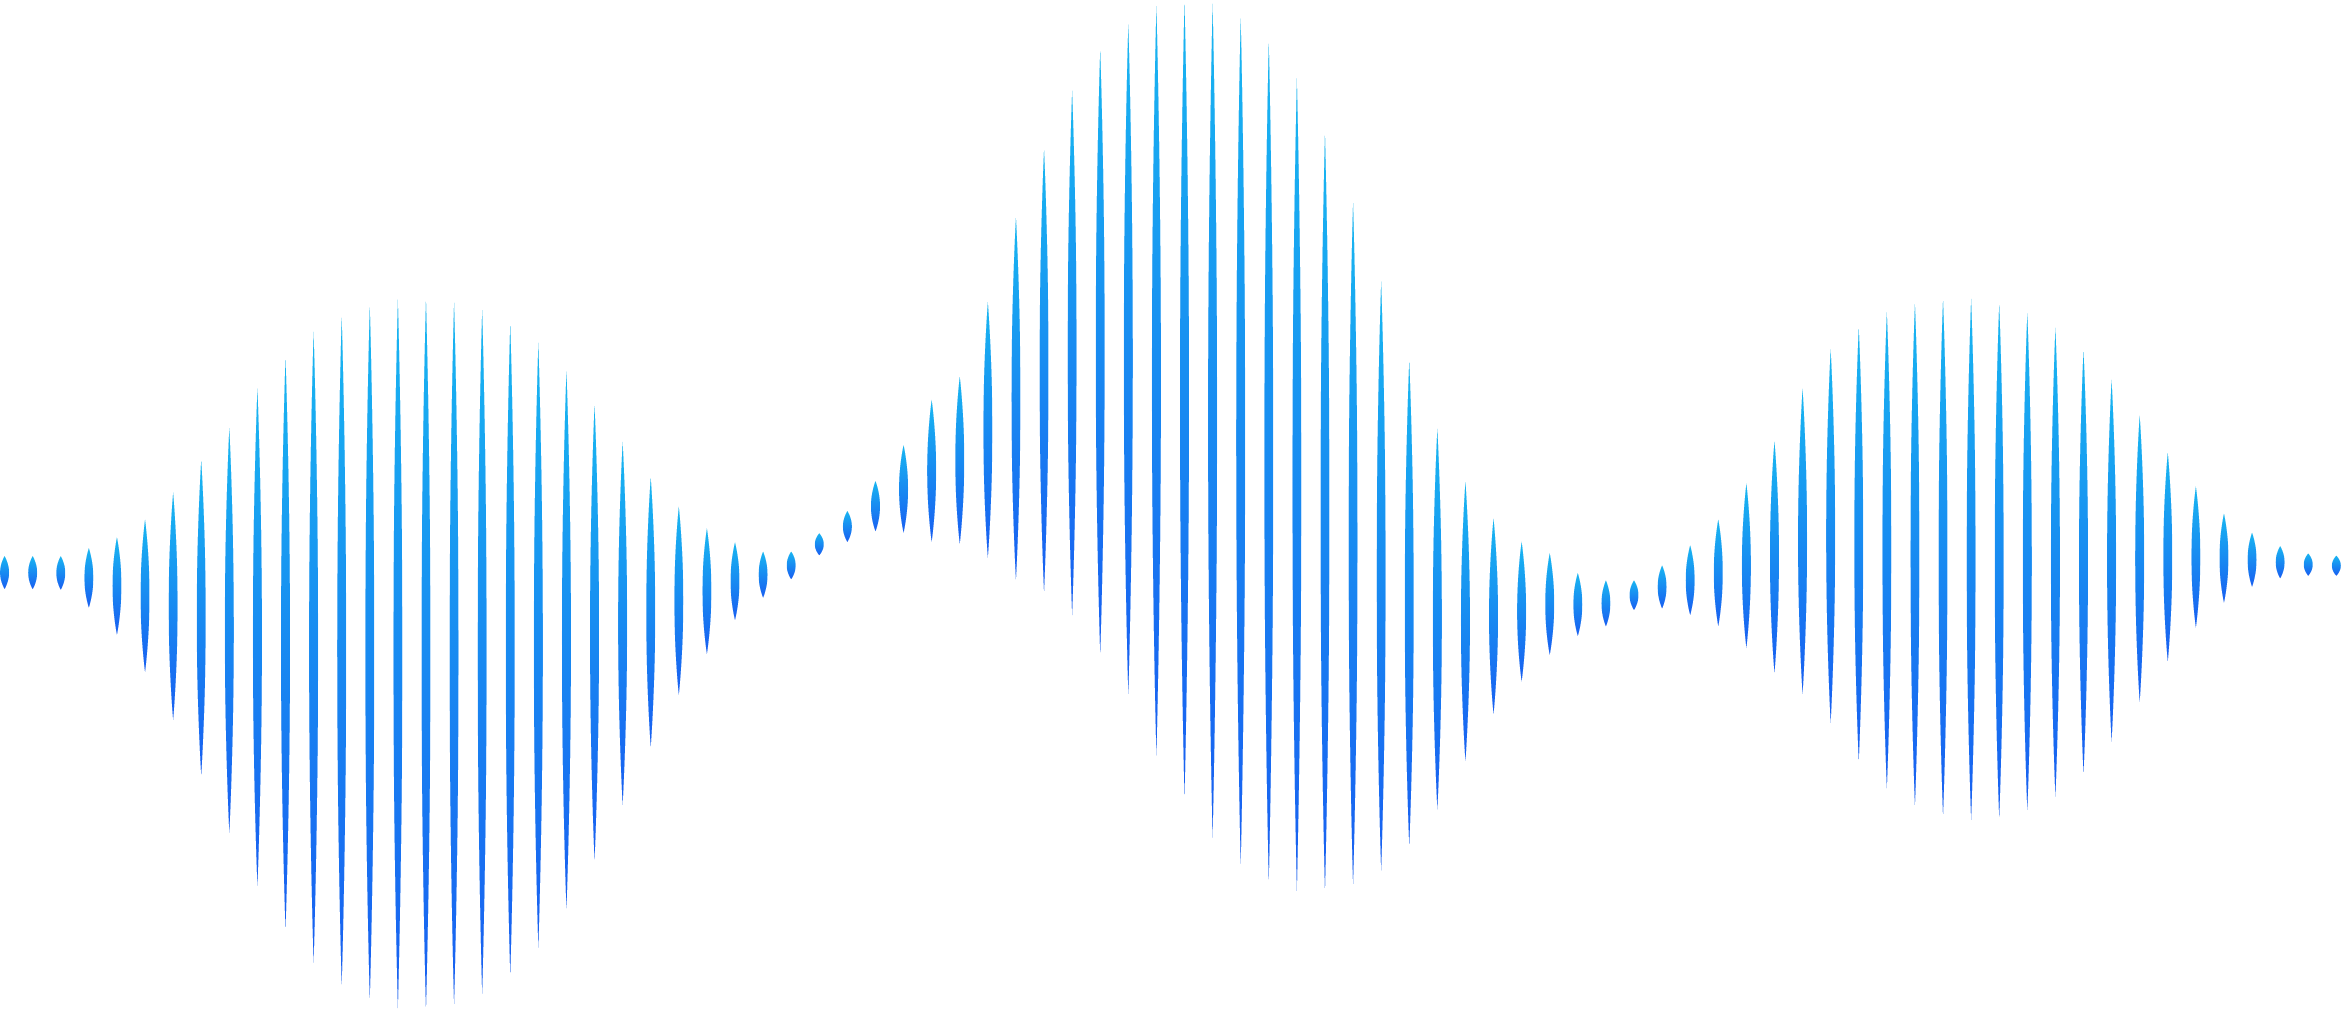 blue soundwaves